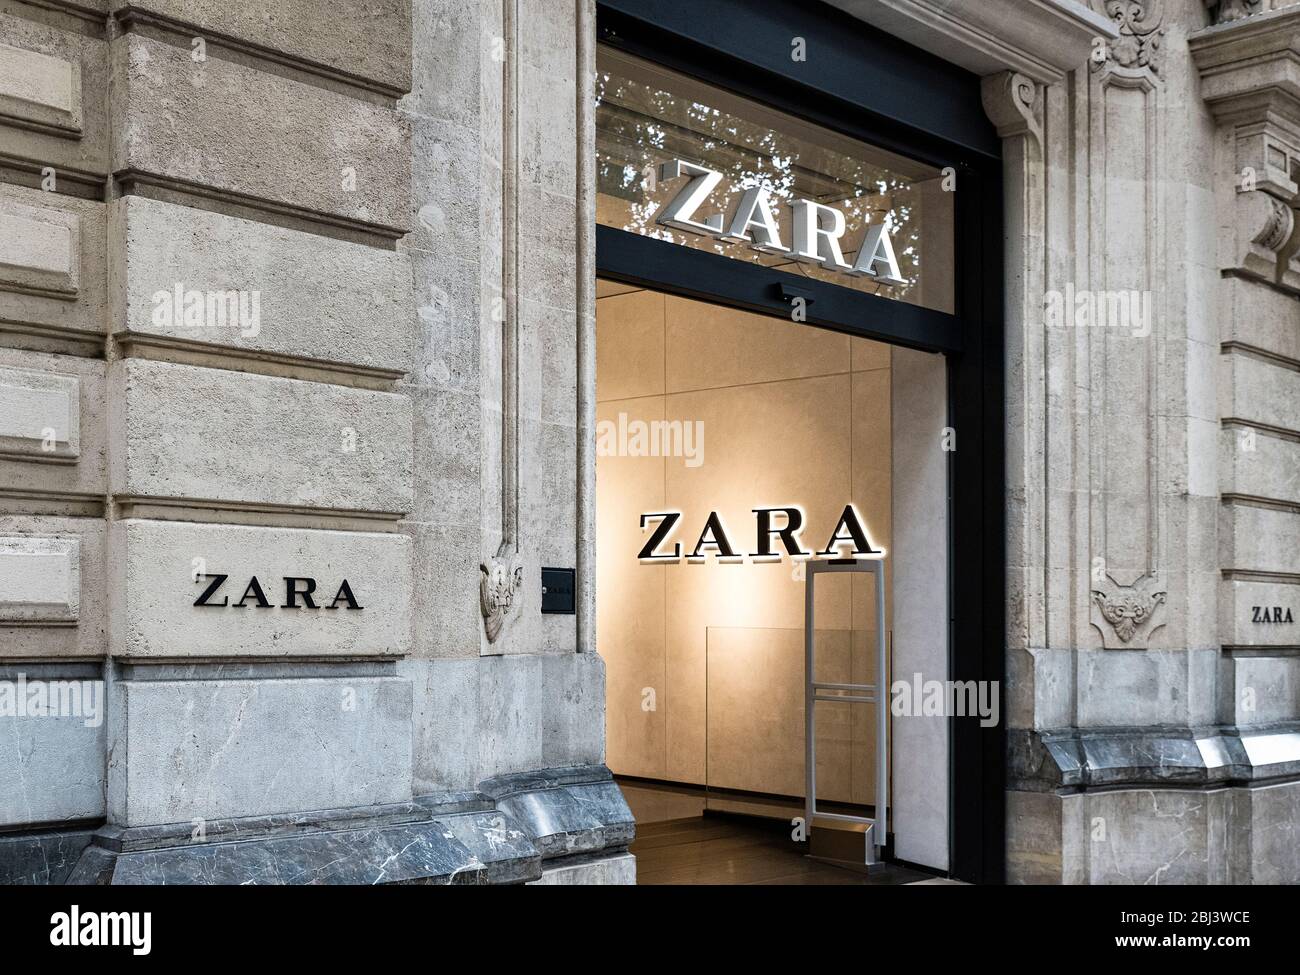 Zara department store in Palma Stock Photo - Alamy